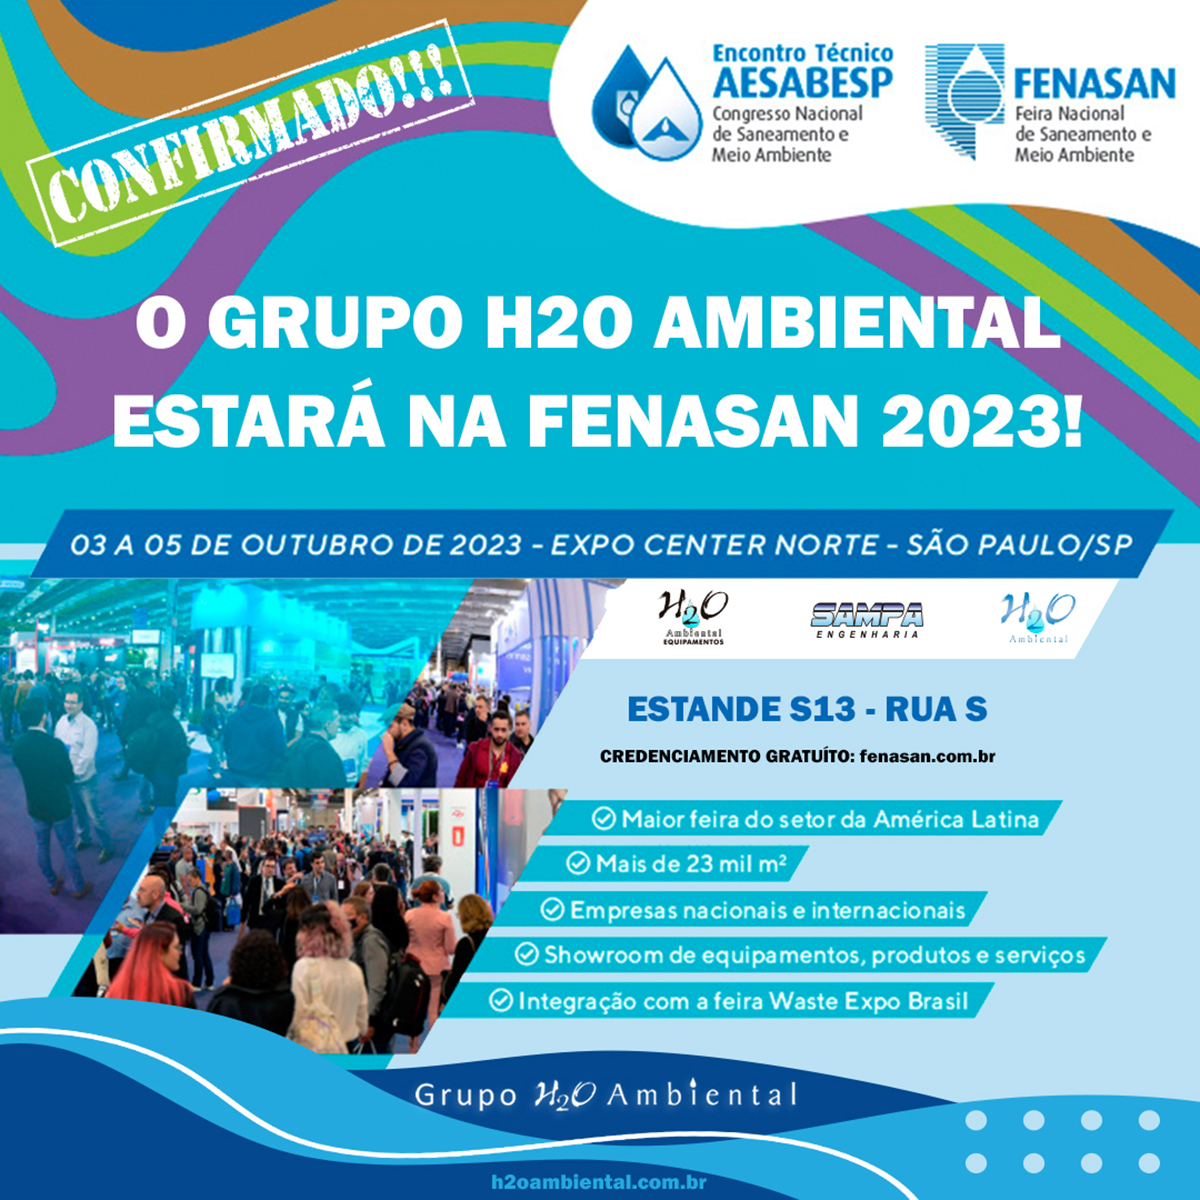 Confirmado, o Grupo H2O Ambiental estará na Fenasan 2023!